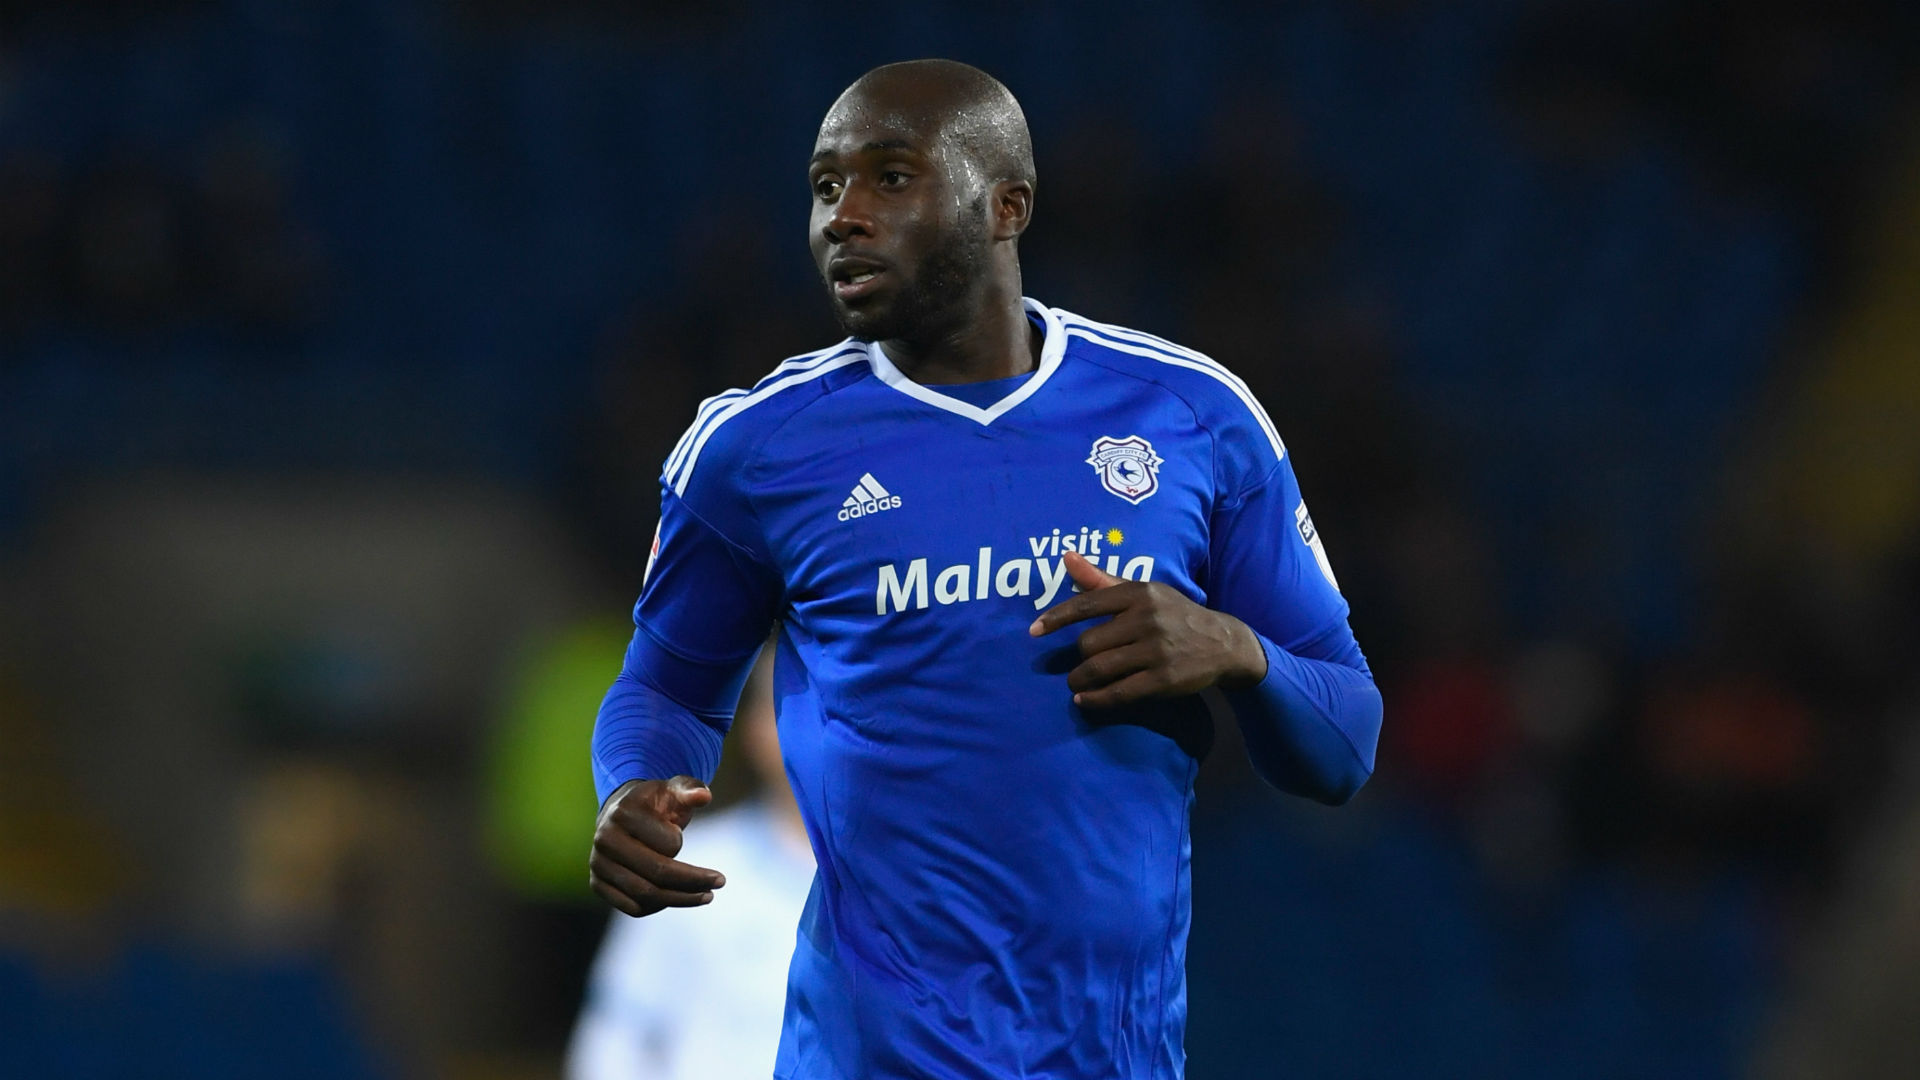 Sol Bamba: Cardiff City defender undergoing cancer treatment